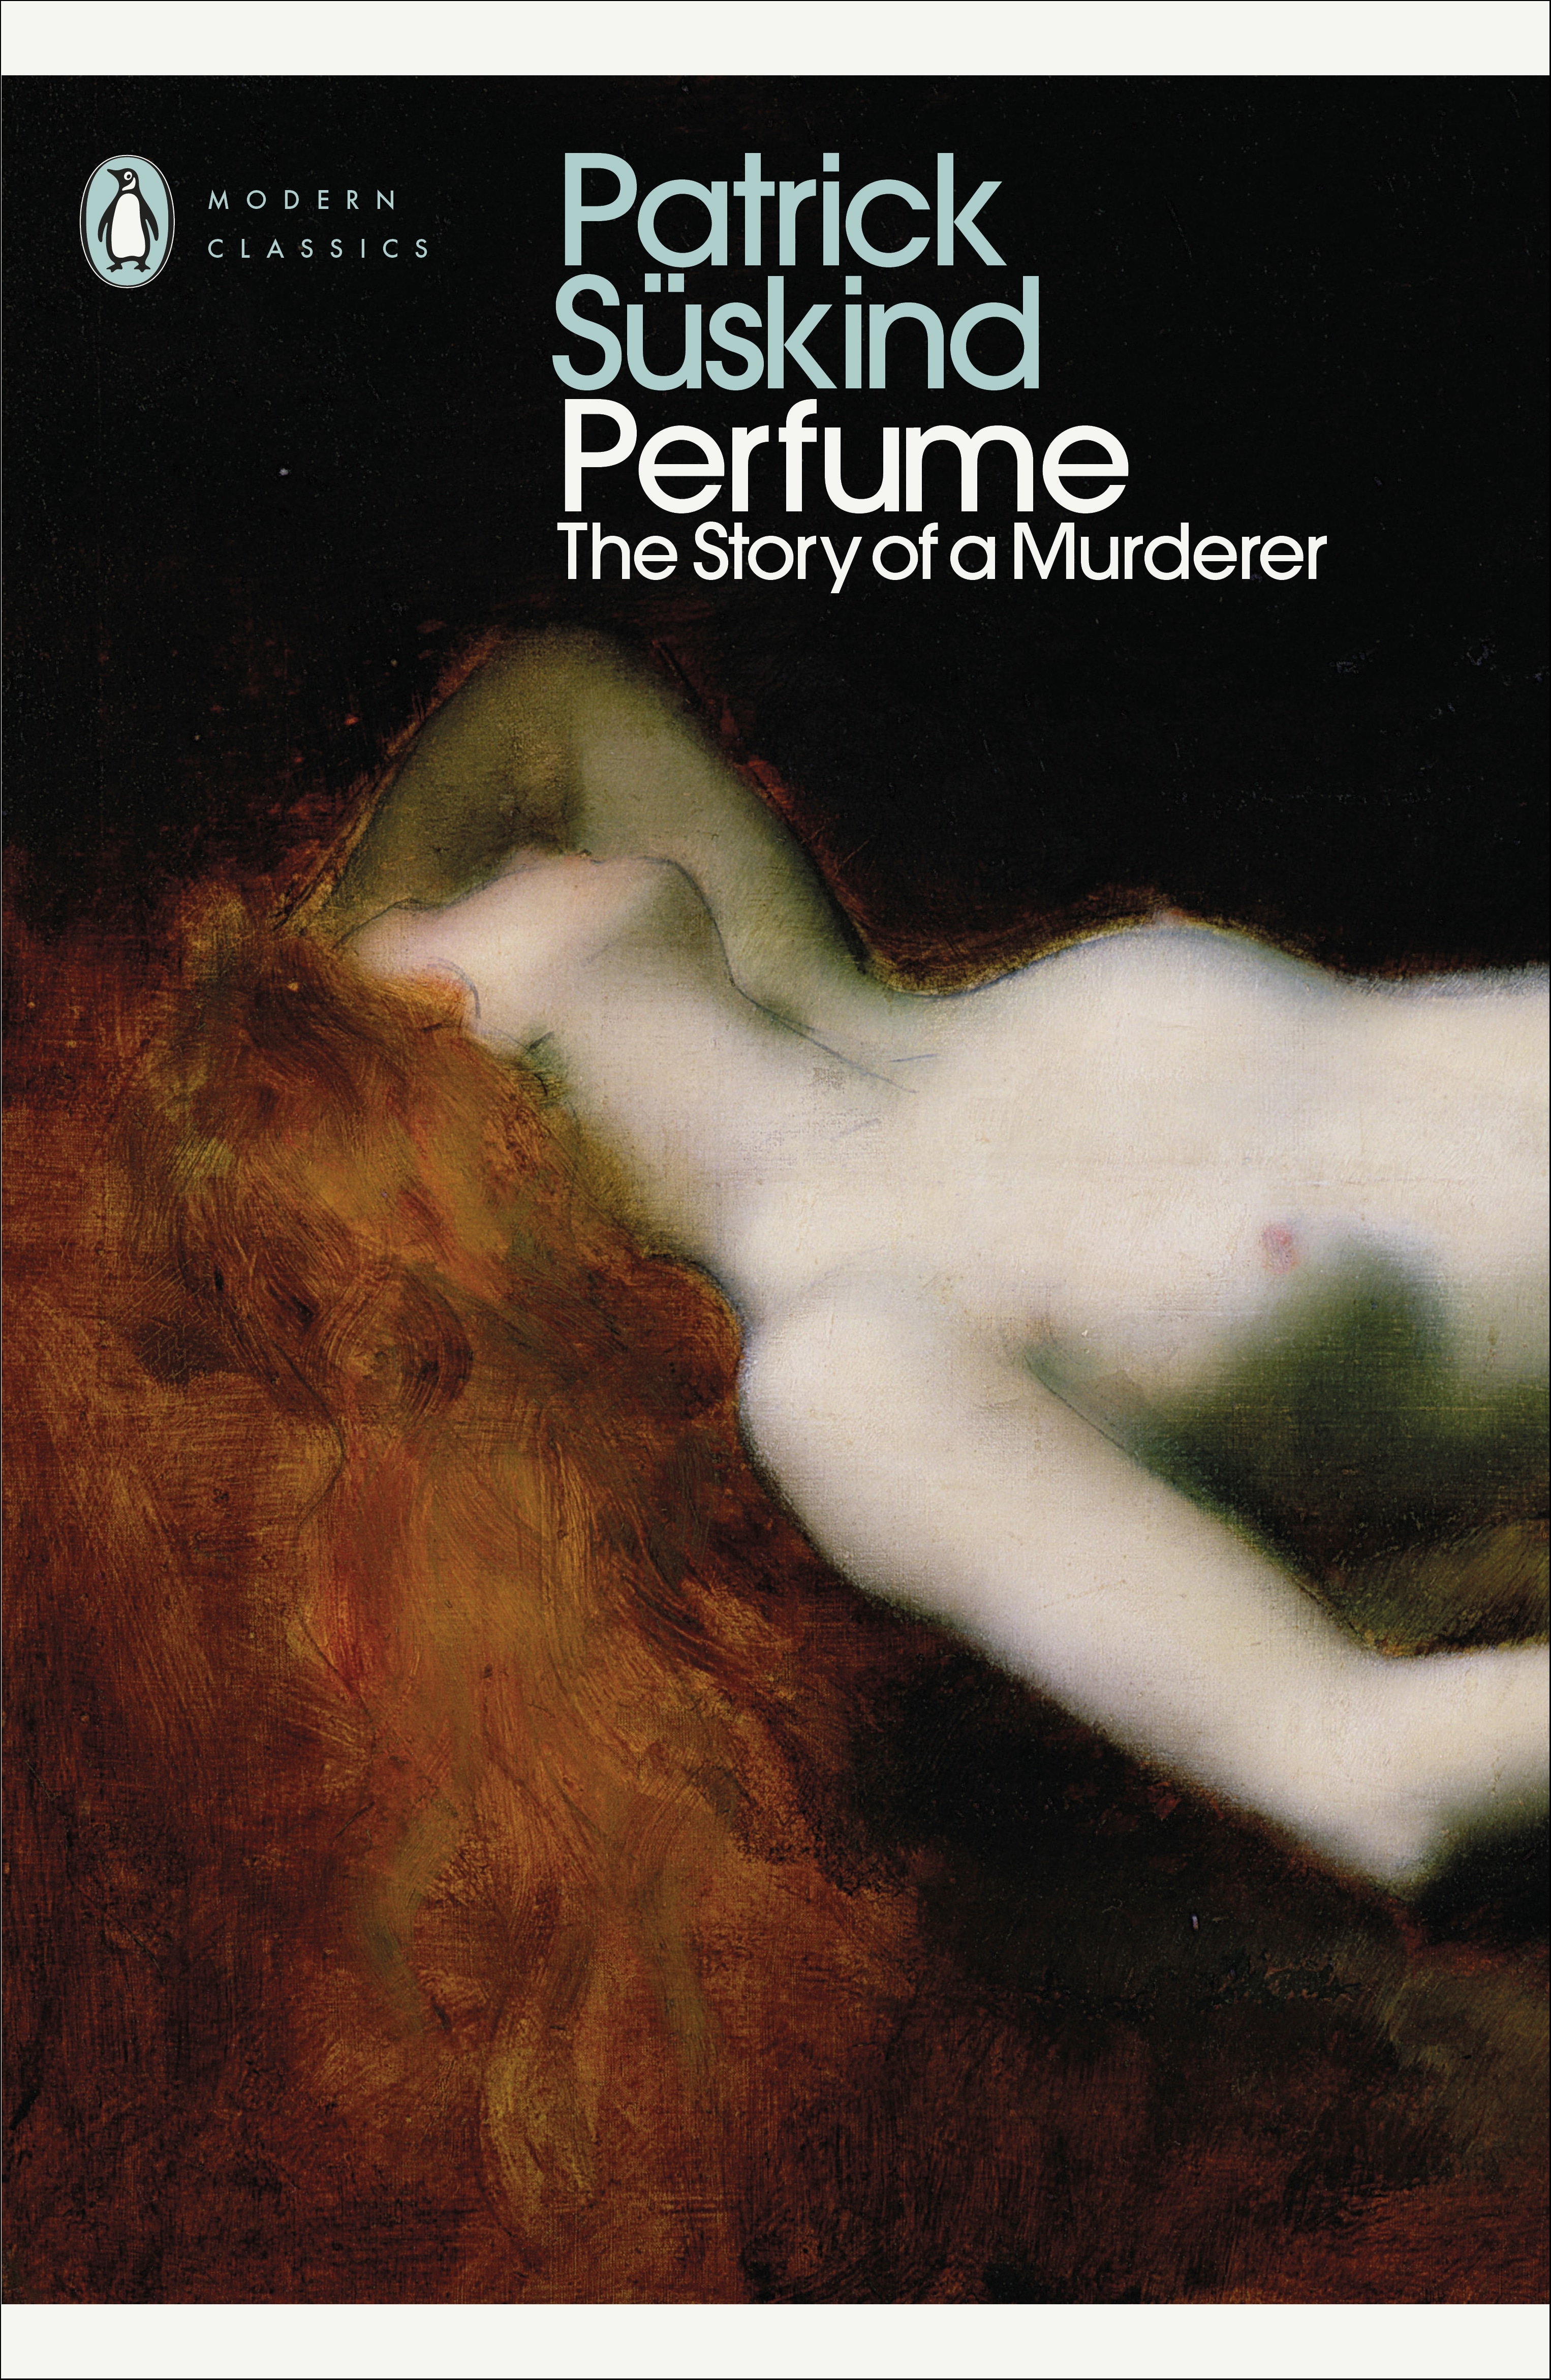 Book “Perfume” by Patrick Süskind — February 6, 2020